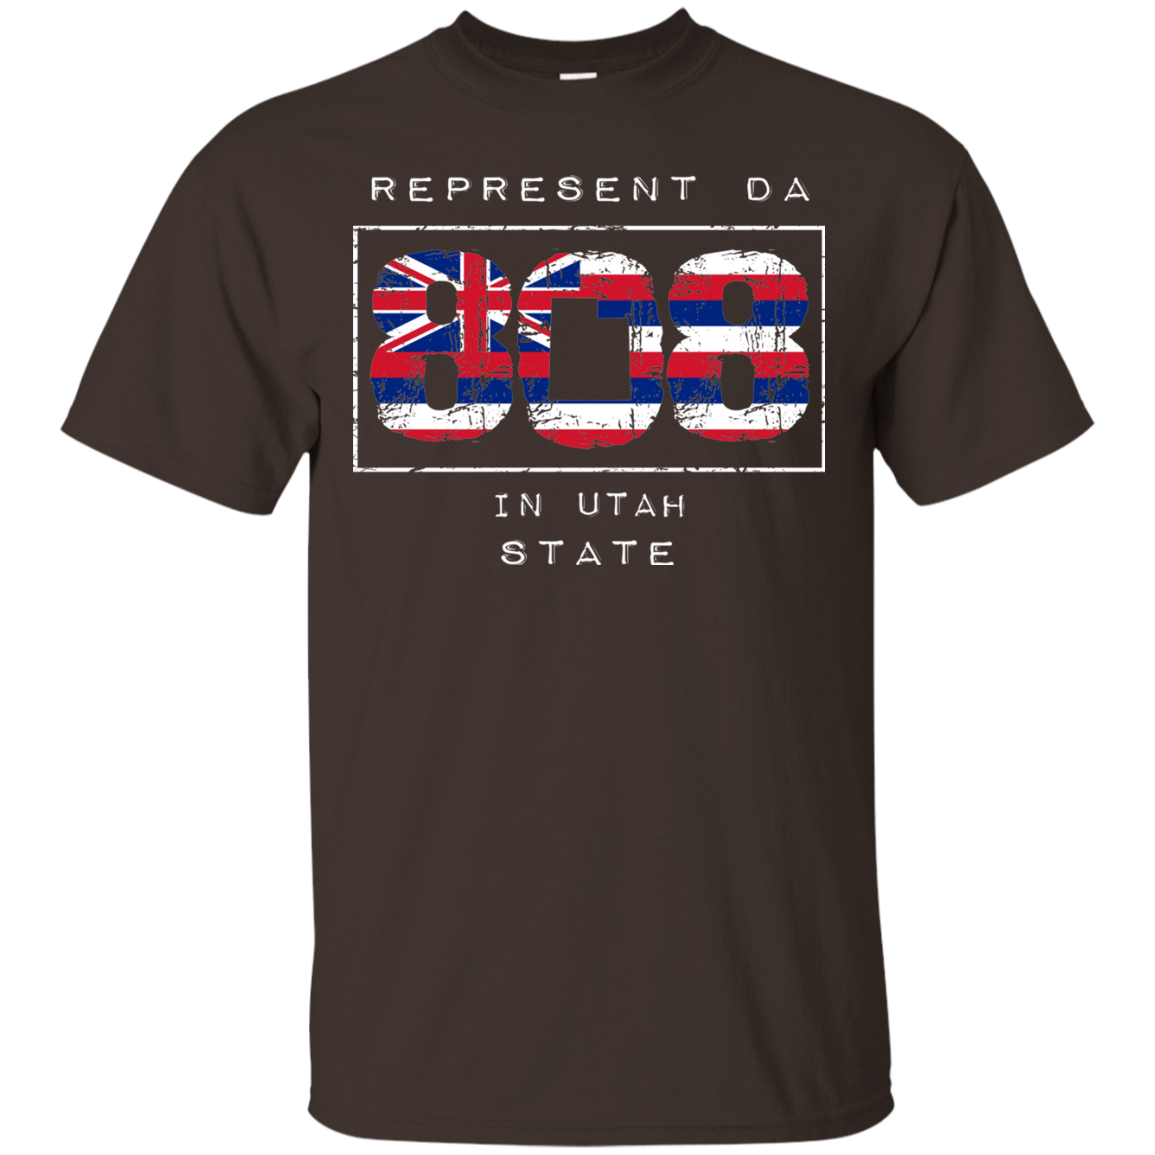 Rep Da 808 In Utah State Ultra Cotton T-Shirt, T-Shirts, Hawaii Nei All Day